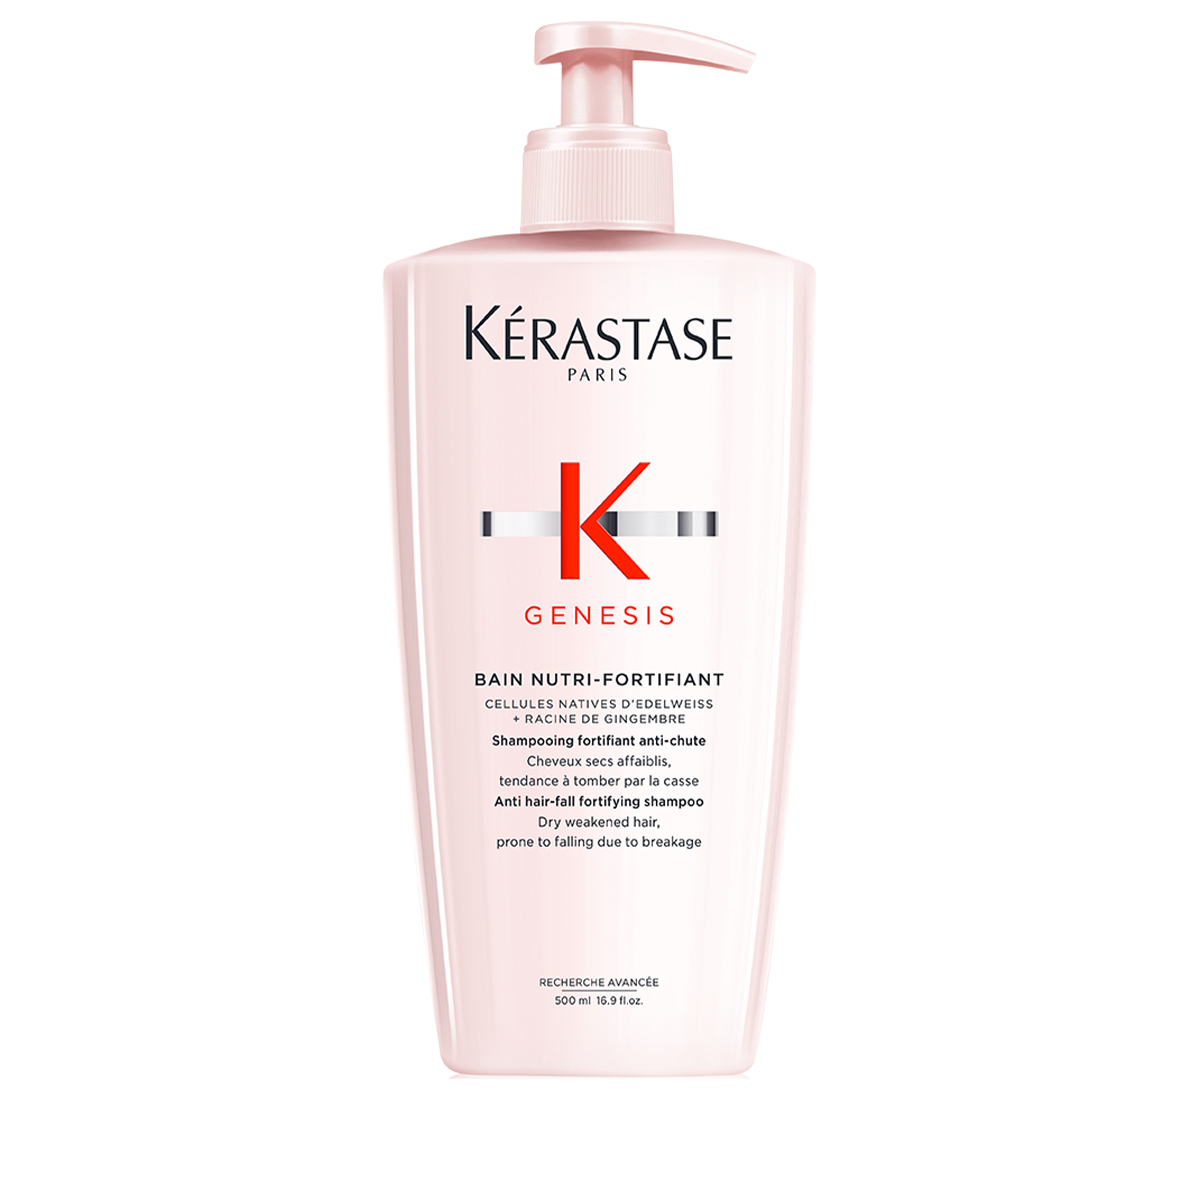 Kérastase Šampon proti vypadávání suchých vlasů Genesis Bain Nutri-Fortifiant (Anti Hair-Fall Fortifying Shampoo) 1000 ml